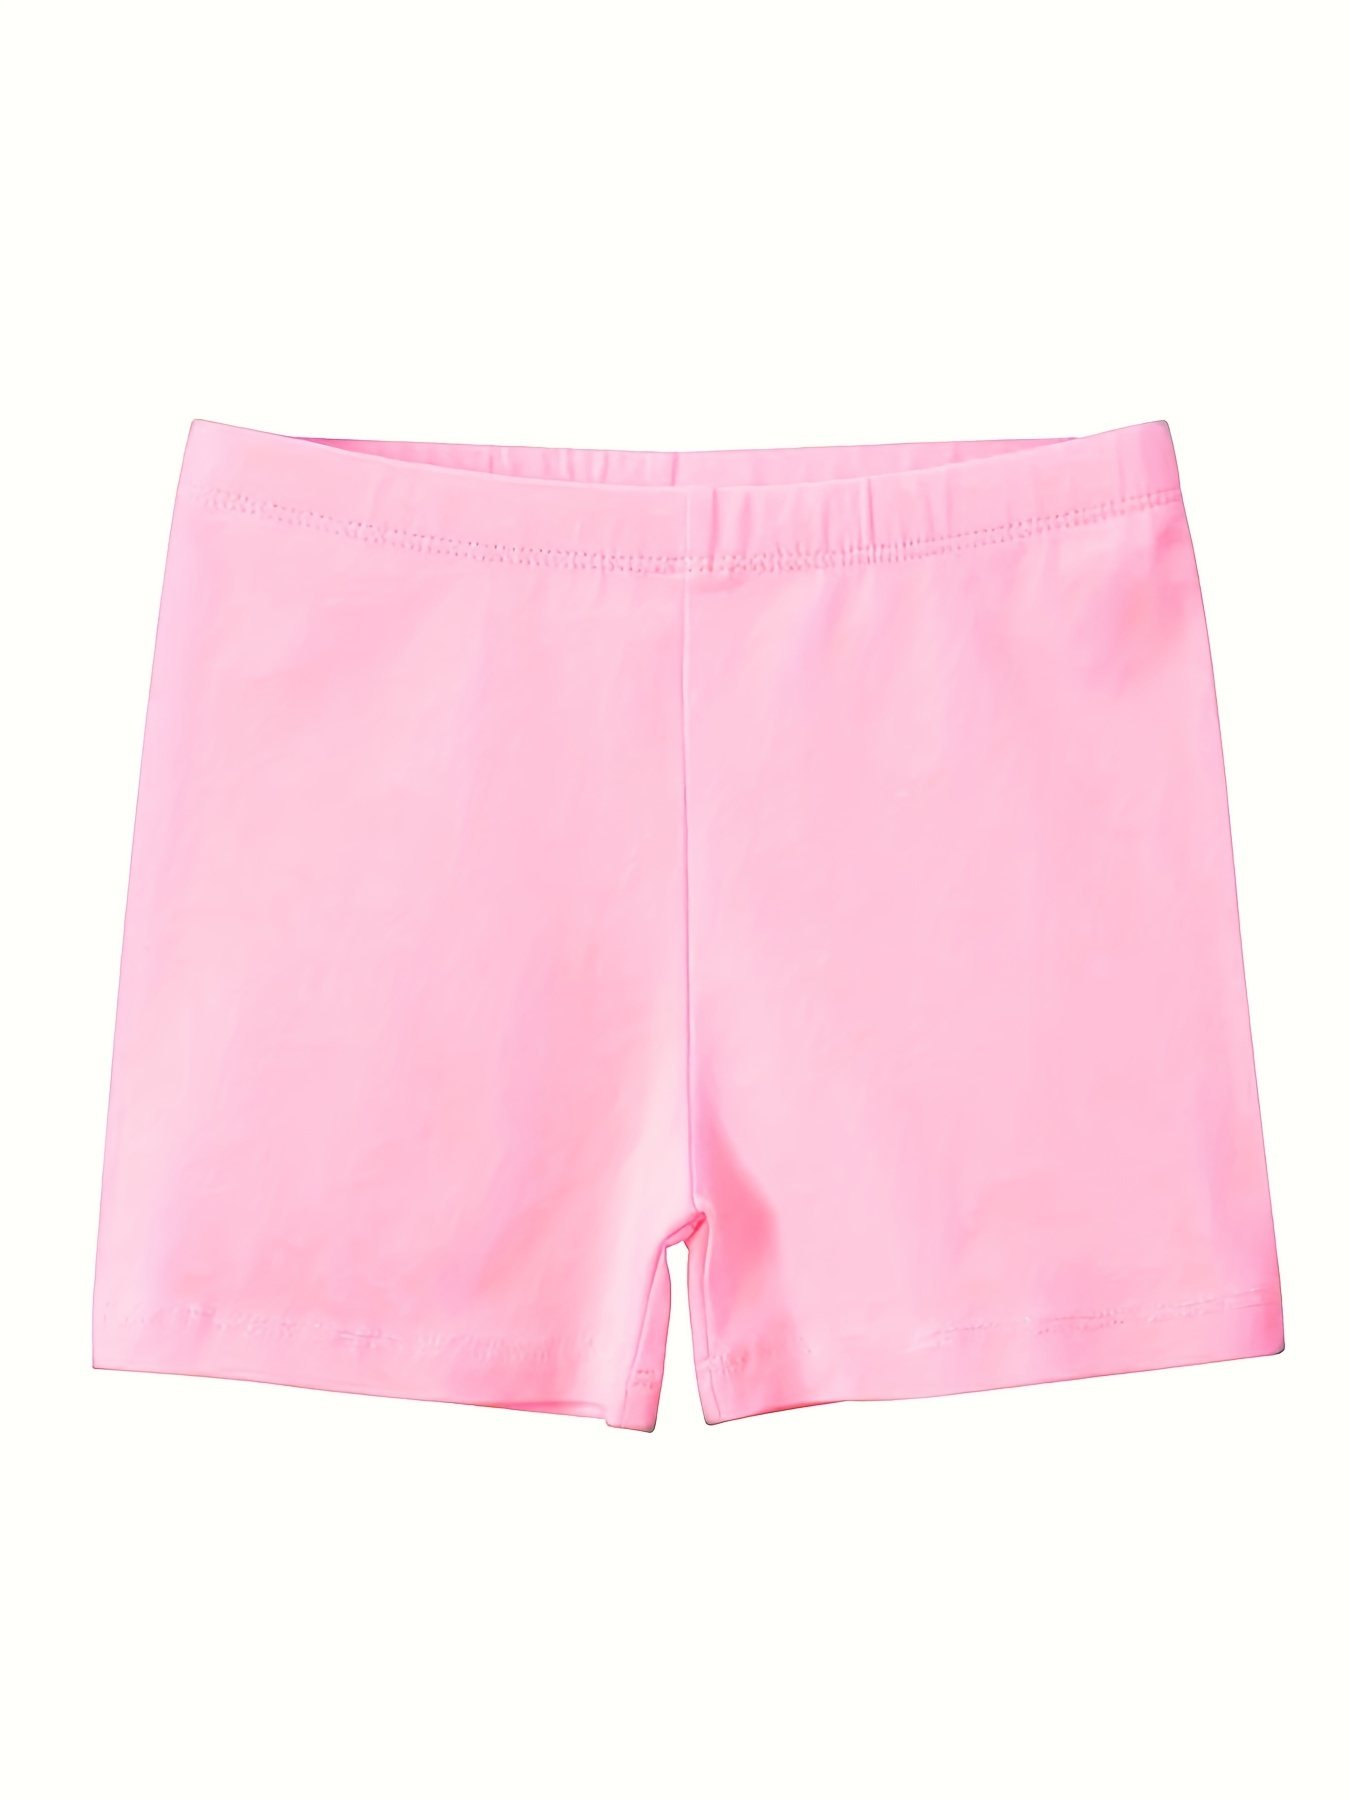 Kids Girls Classic Design Elastic Waist Short Leggings, Kids Clothes For  Spring Summer Indoor Outdoor